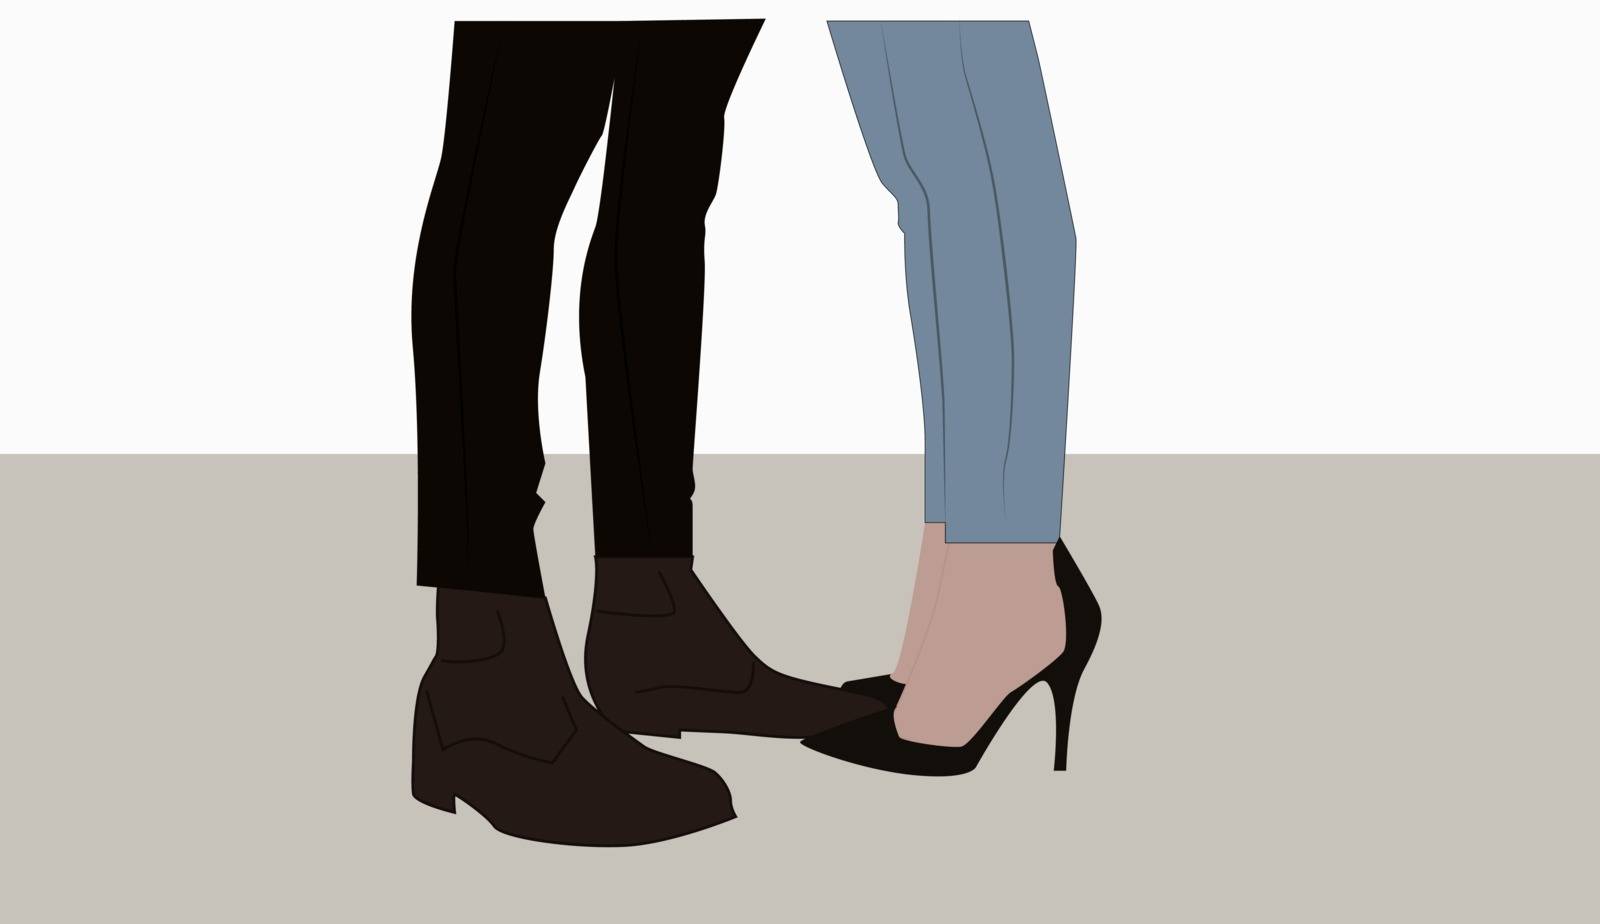 Couples feet, illustration, vector on white background.